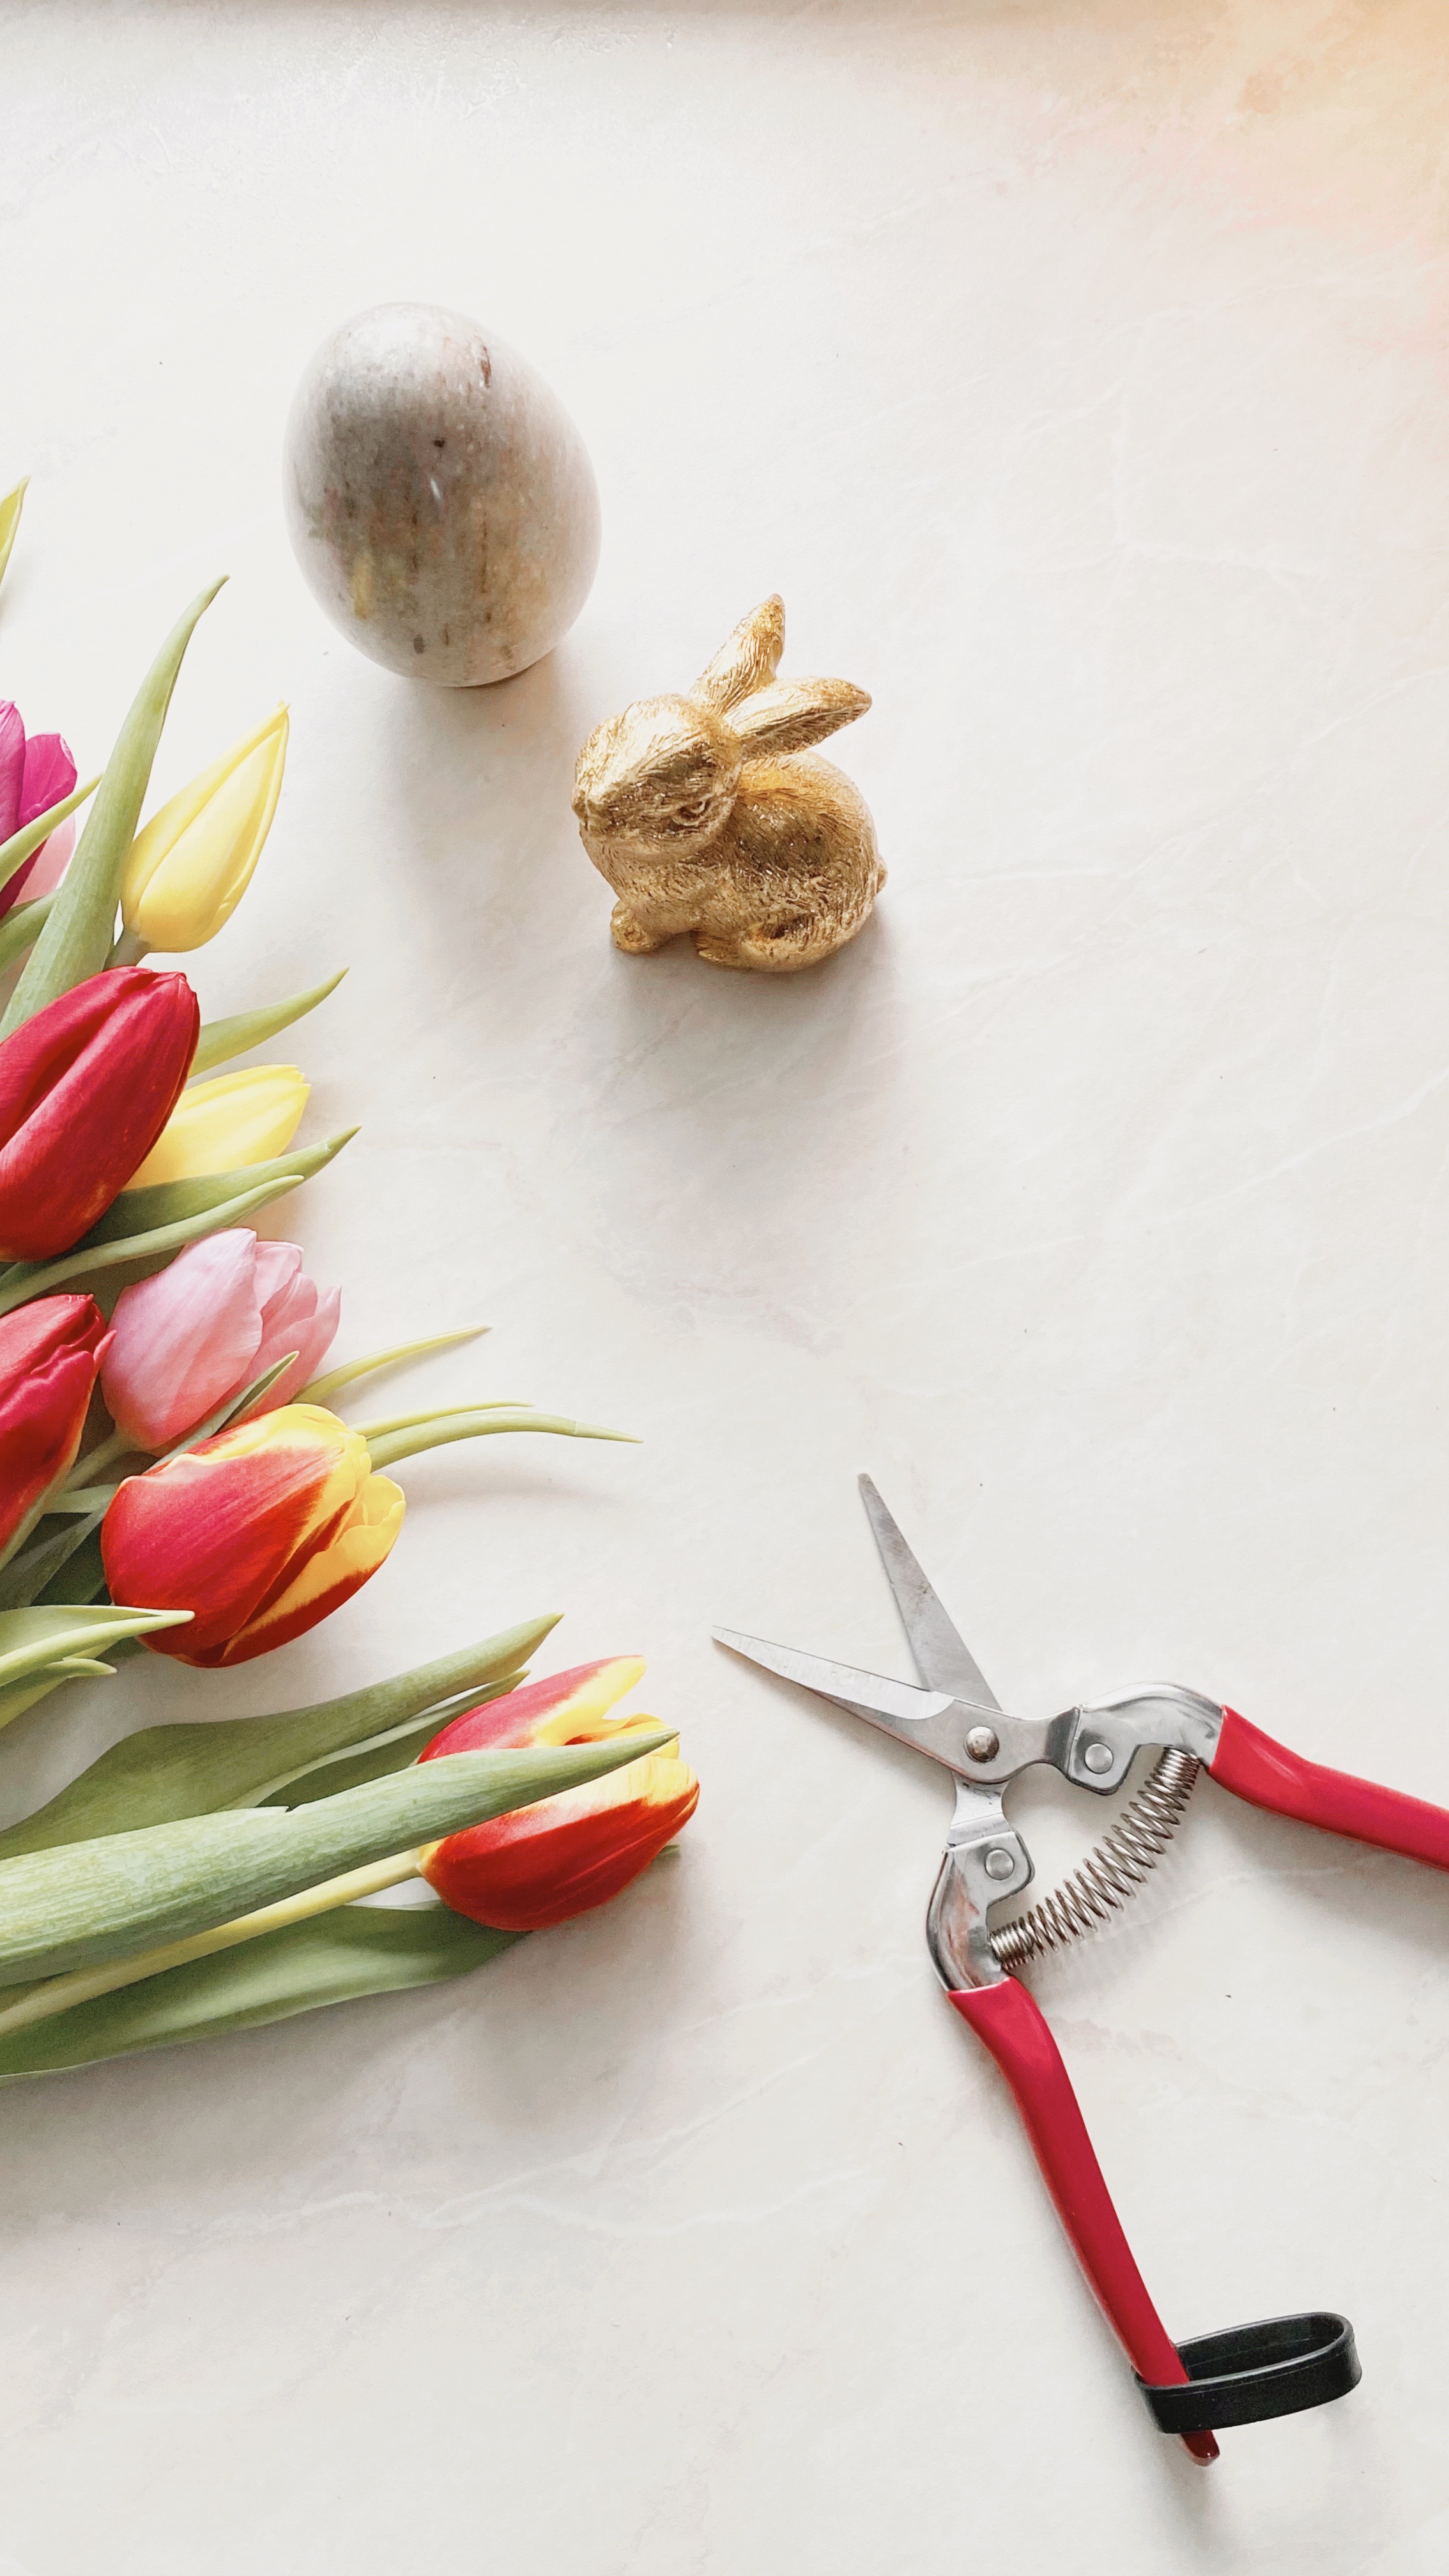 10 curiosidades sobre los tulipanes que os encantará saber